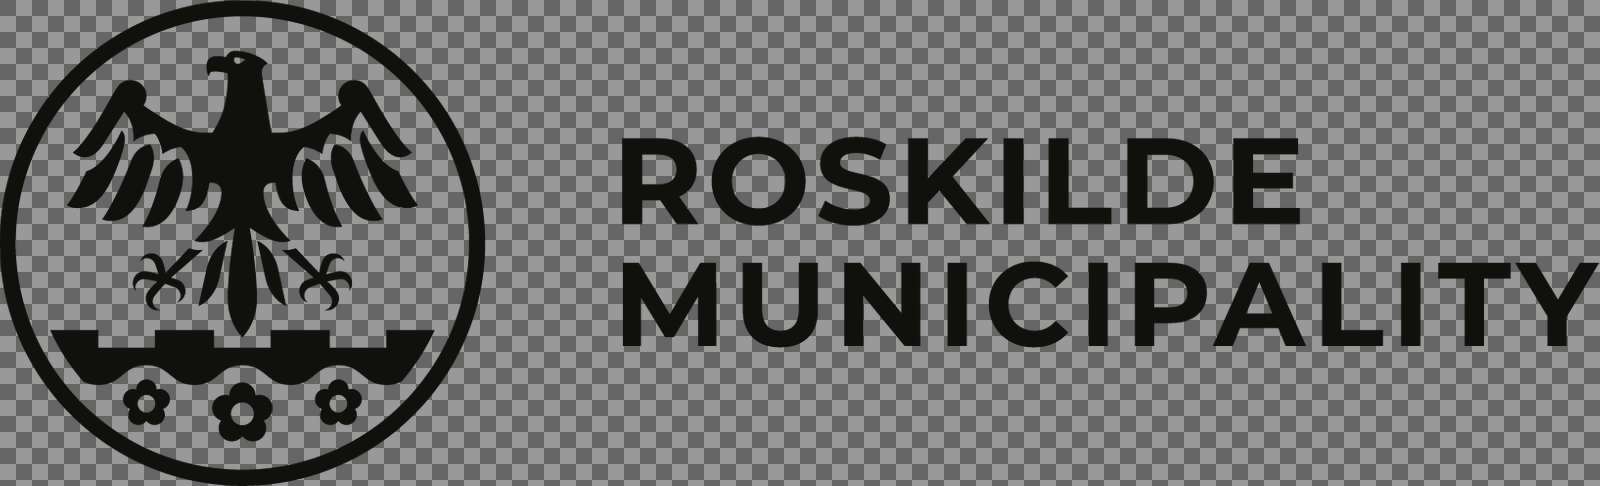 Roskilde Municipality black